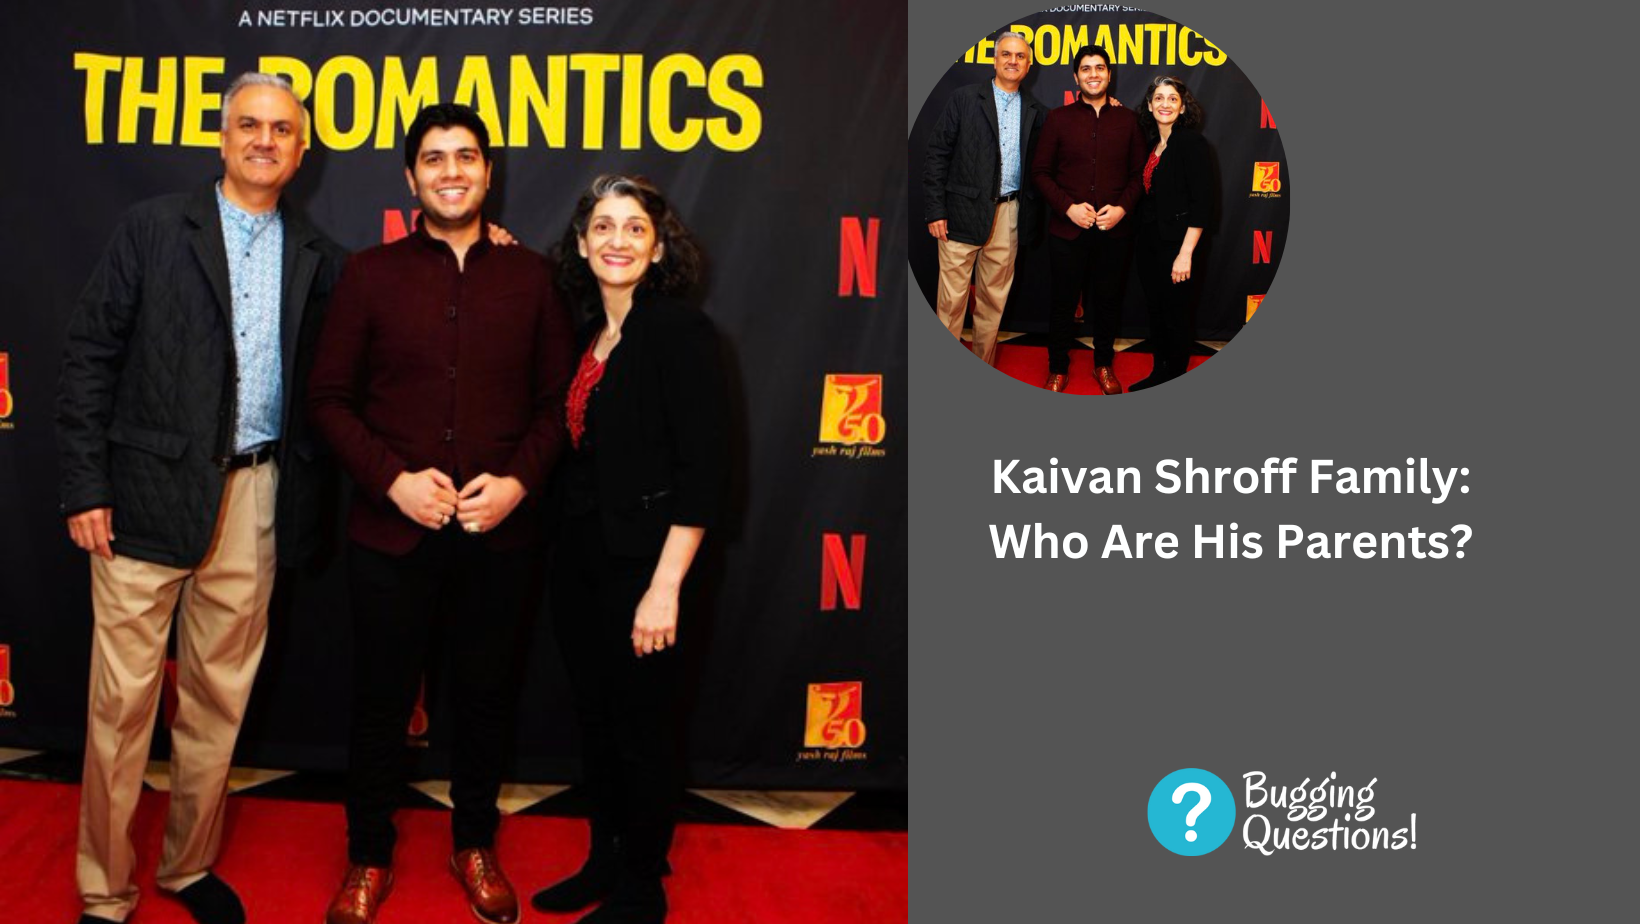 Kaivan Shroff Family: Who Are His Parents?